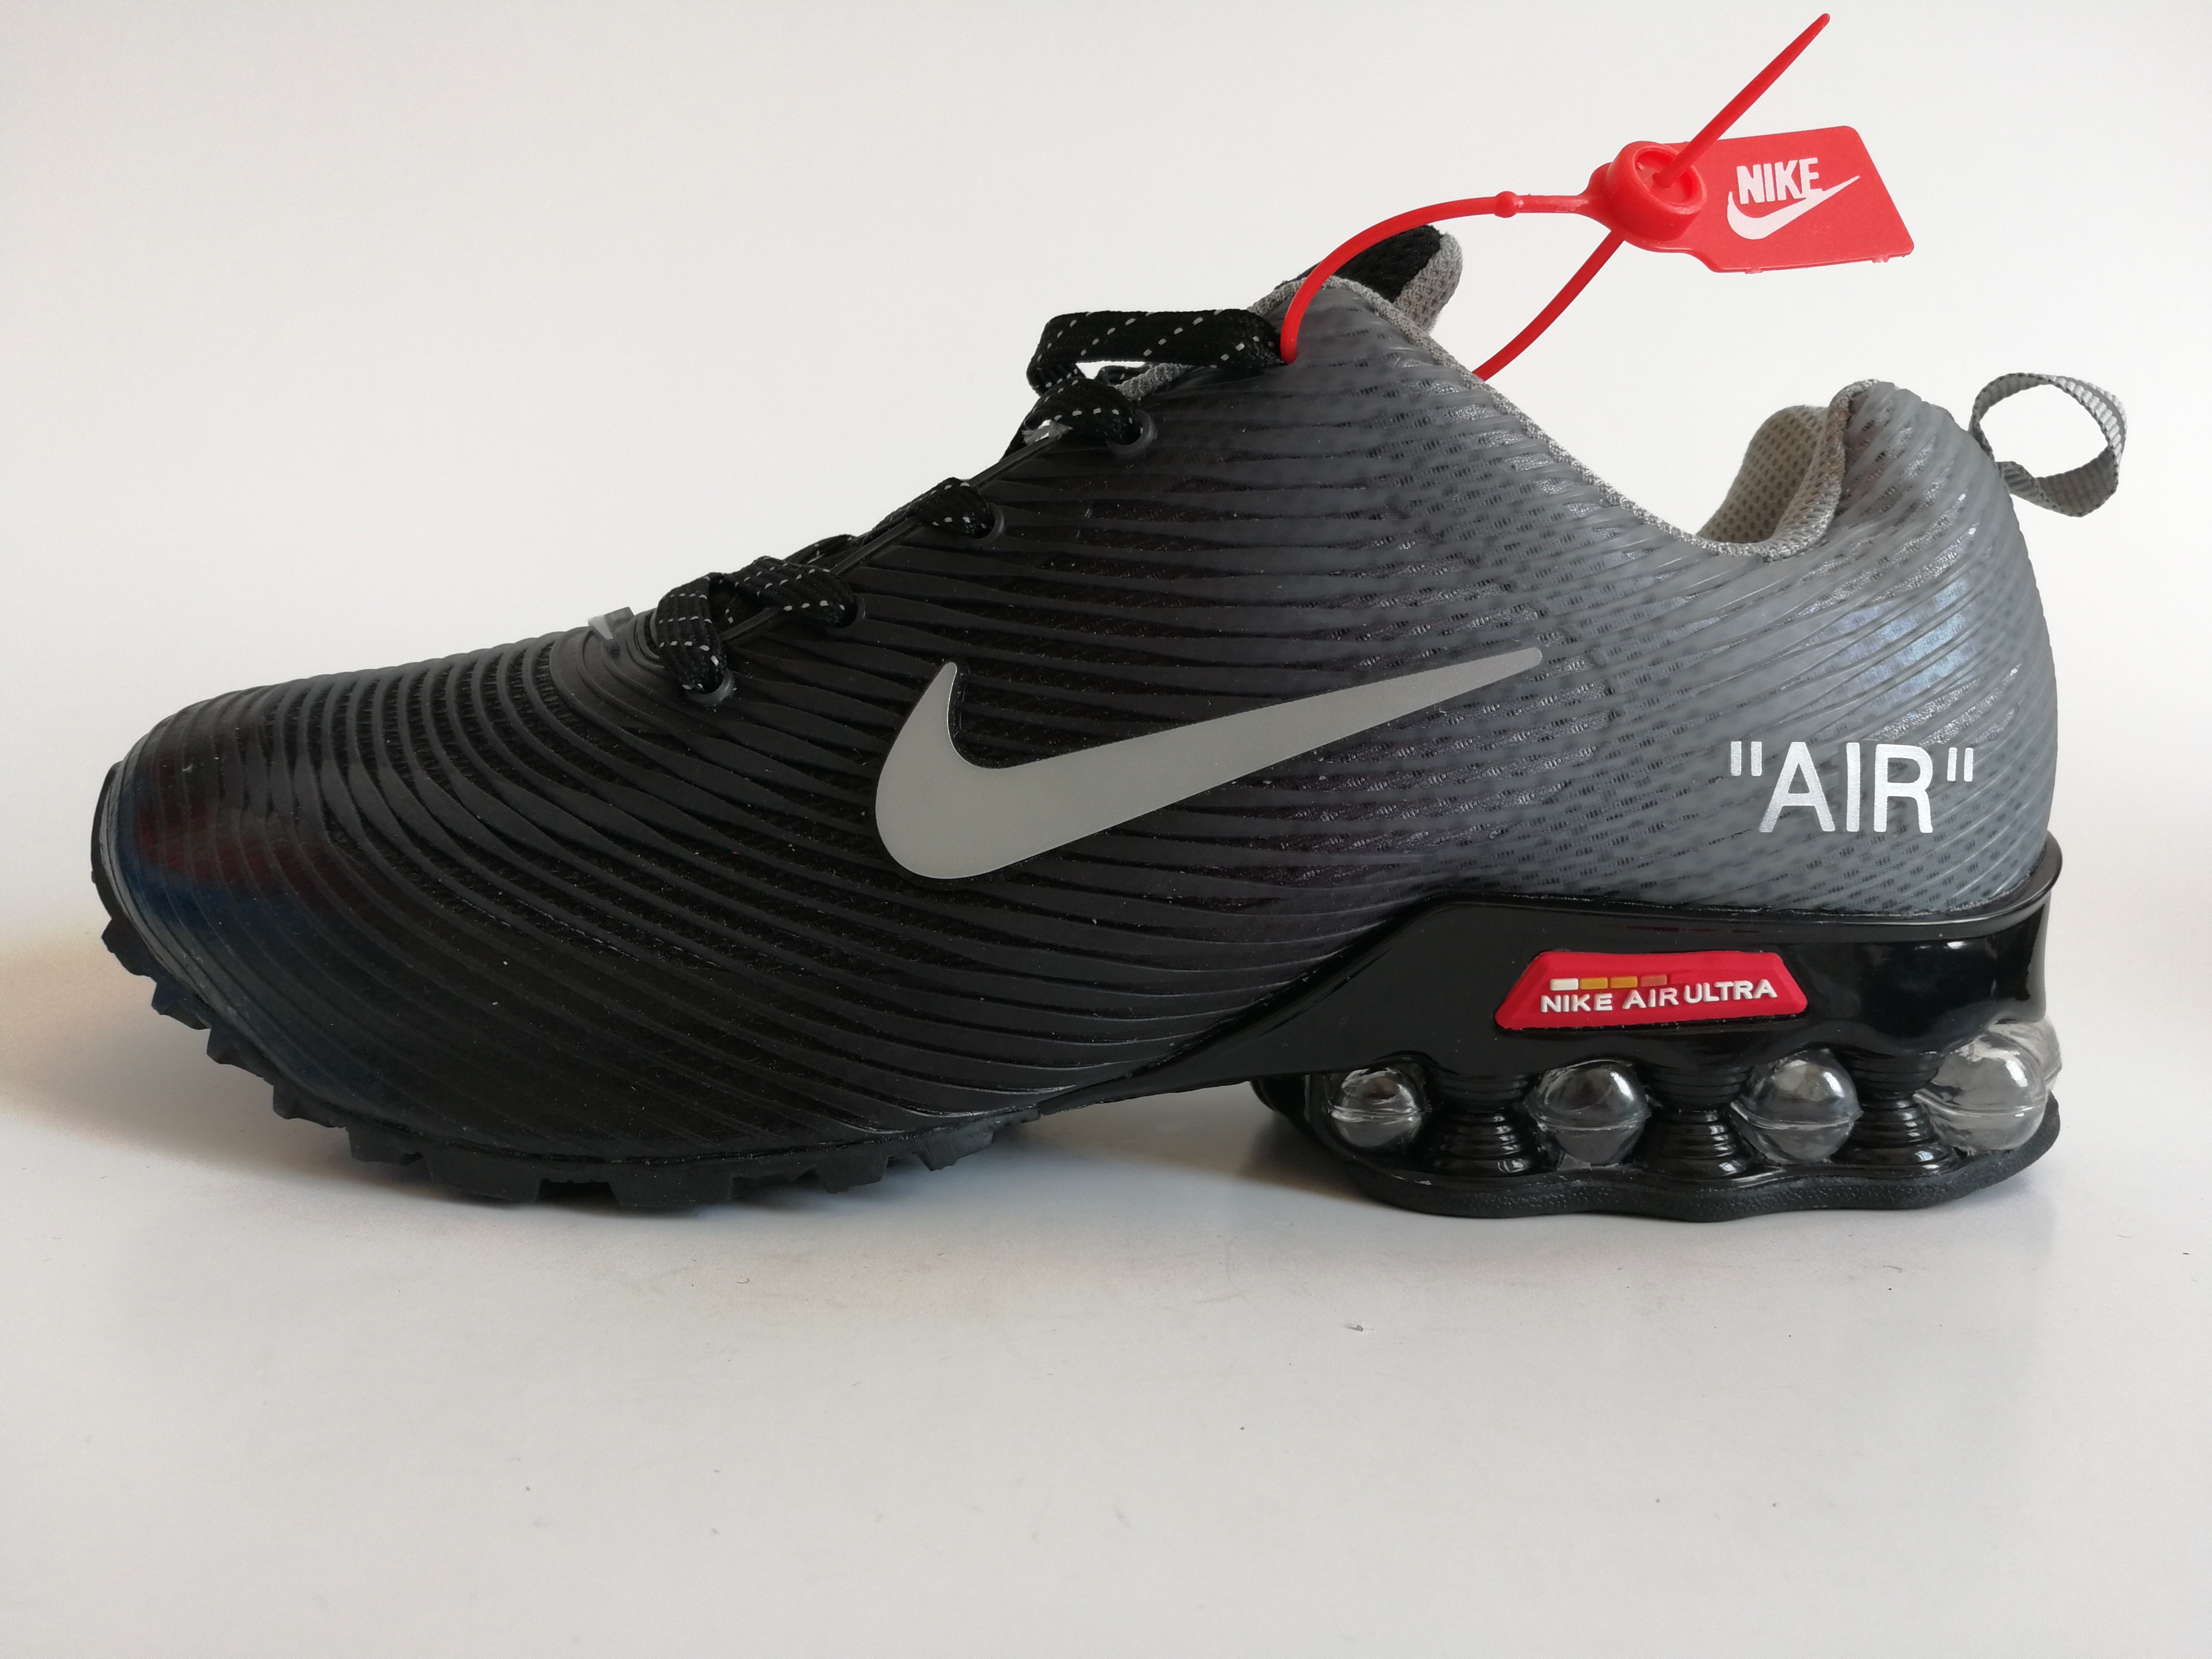 Nike Air Shox 2018.5 III Drop Plastic Black Grey Shoes